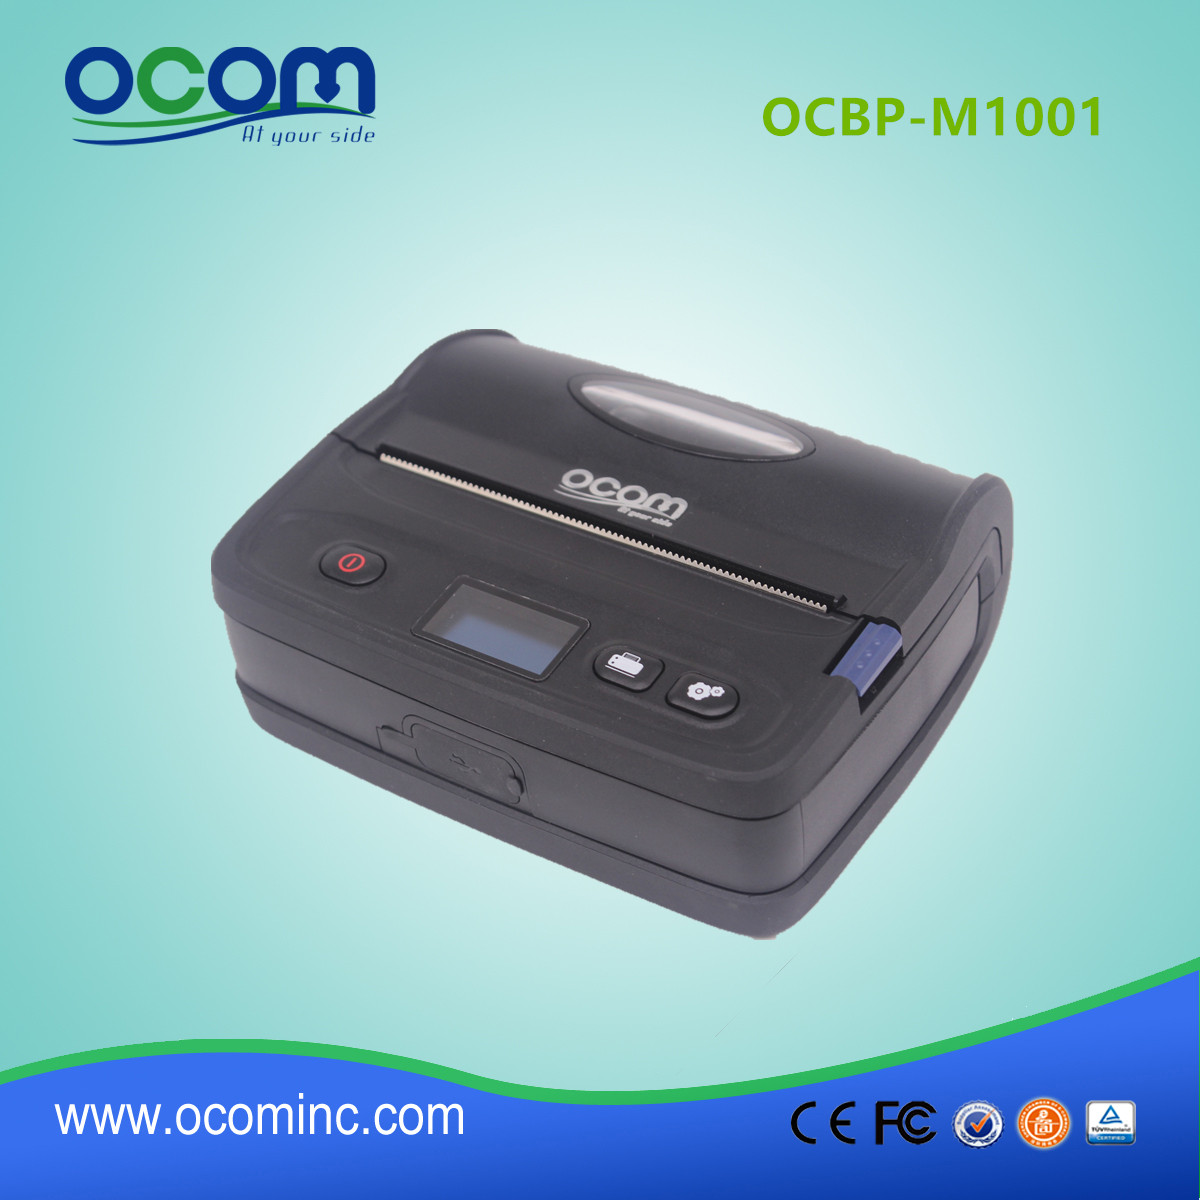 OCBP-M1001 handy portable bluetooth thermal label printer